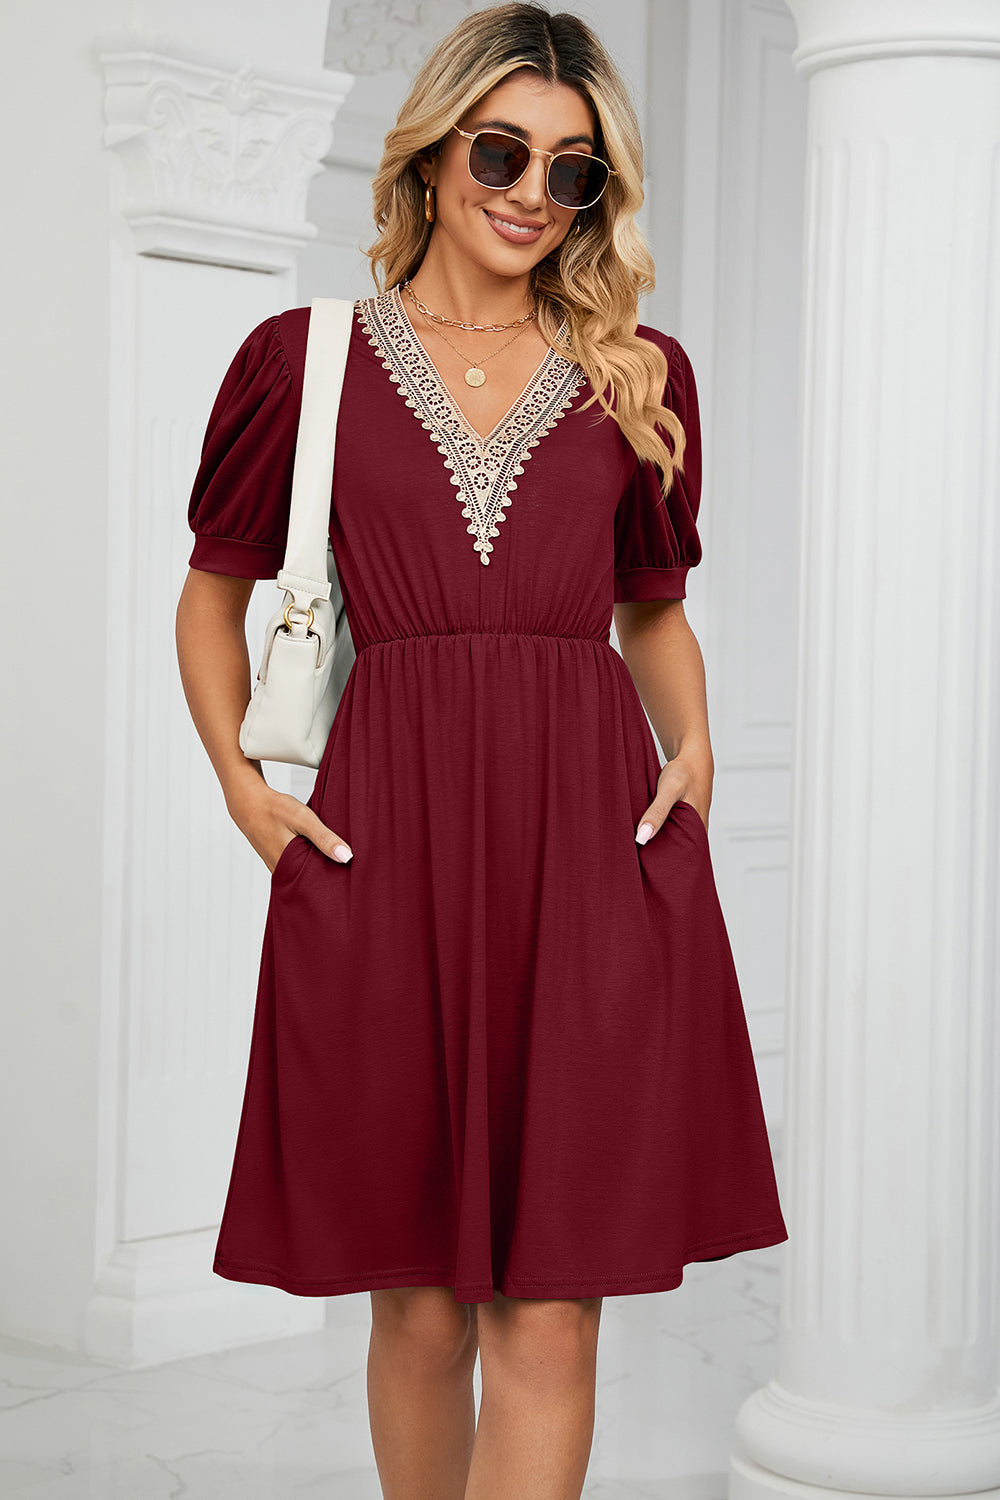 V-Neck Puff Sleeve Dress (8 Colors) Dress Krazy Heart Designs Boutique   